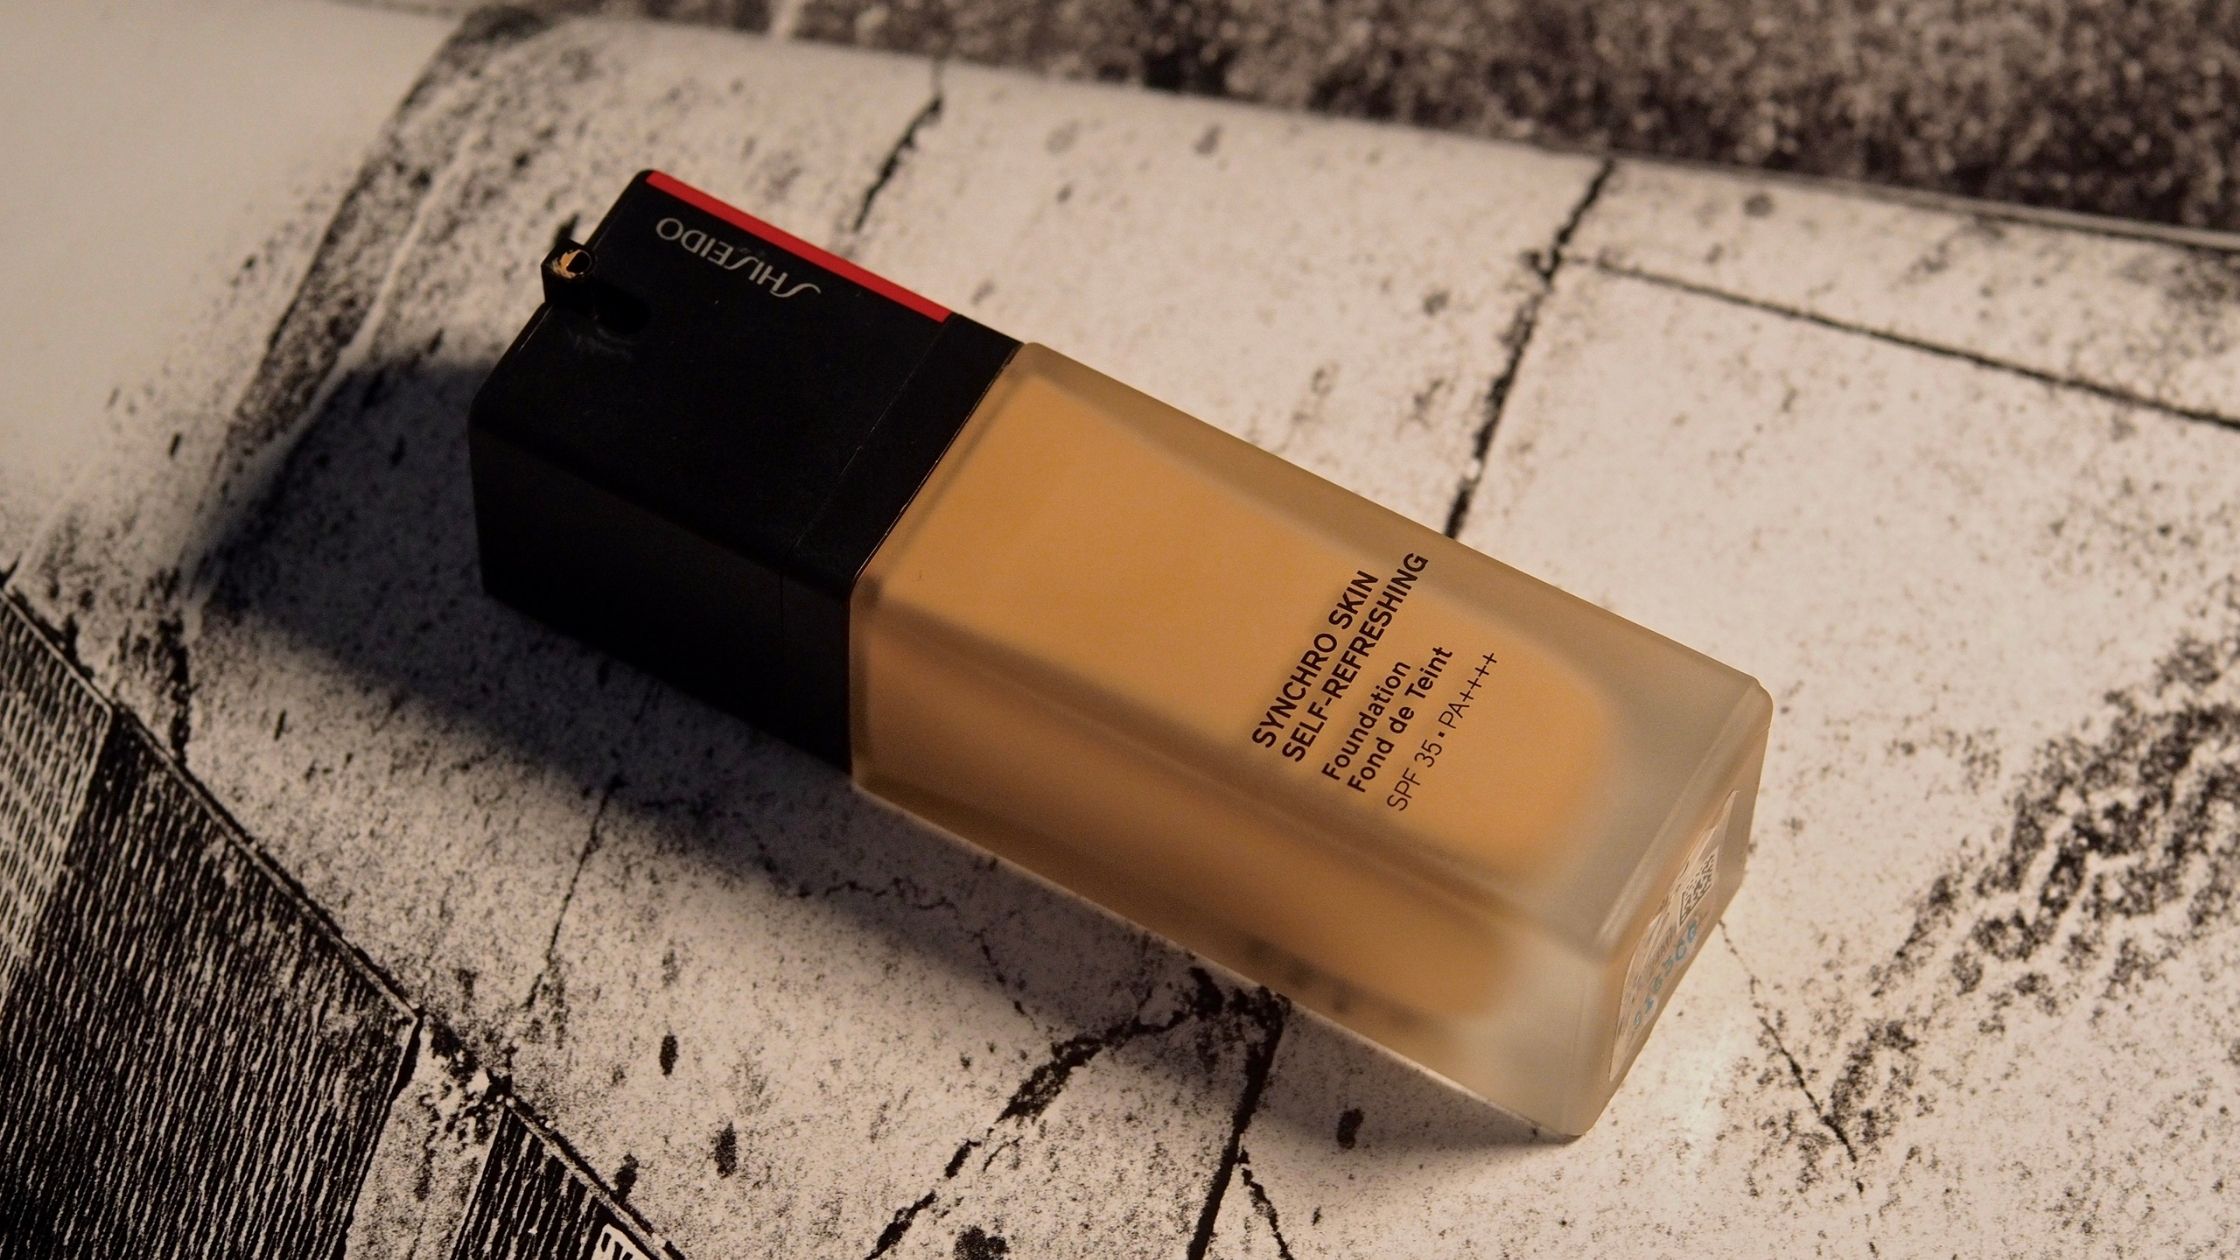 Shiseido synchro skin self-refreshing foundation review